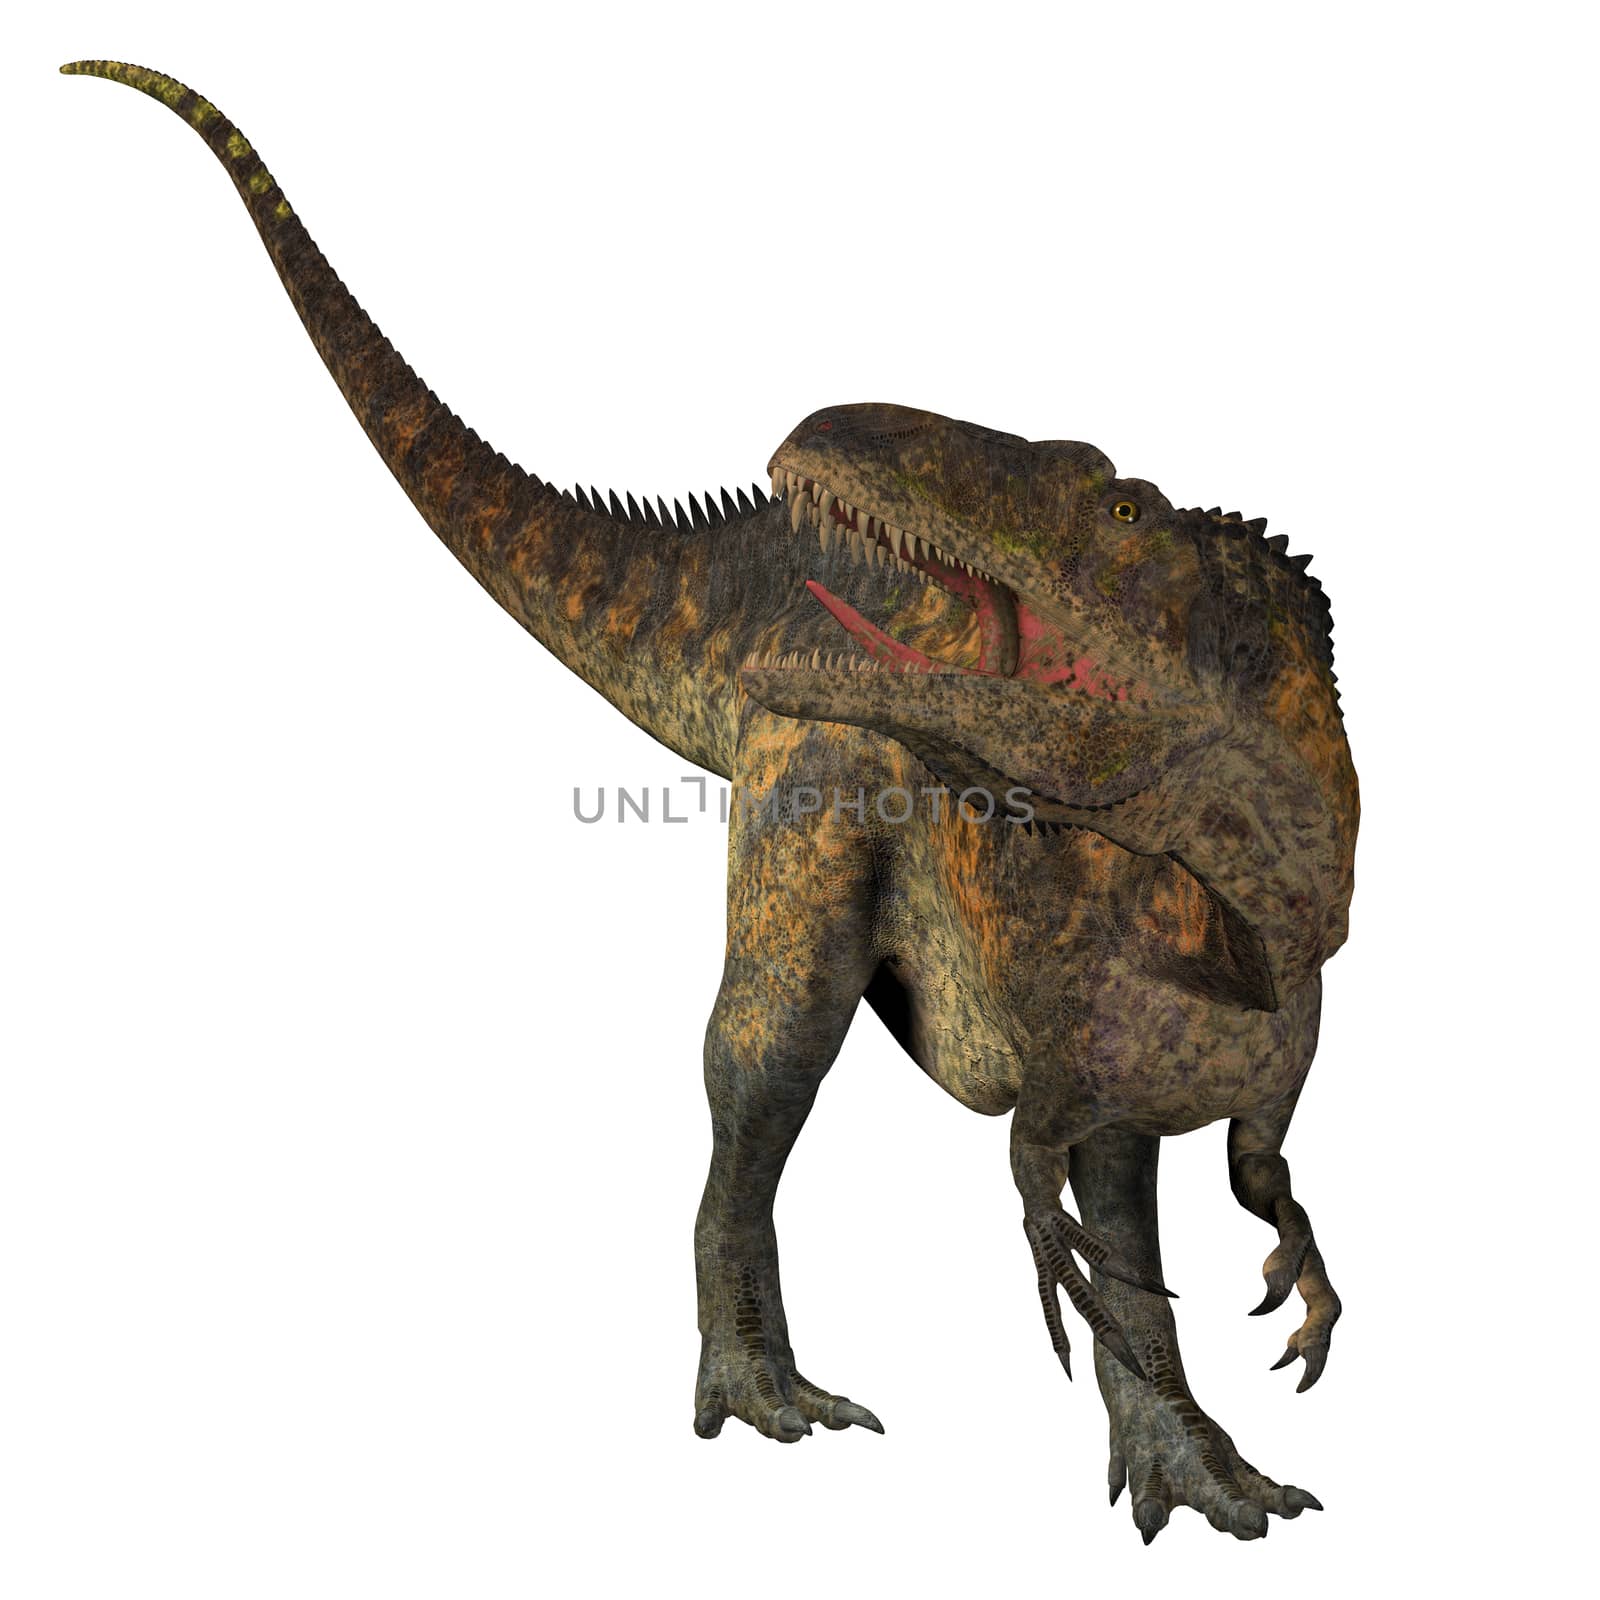 Acrocanthosaurus Dinosaur Tail by Catmando